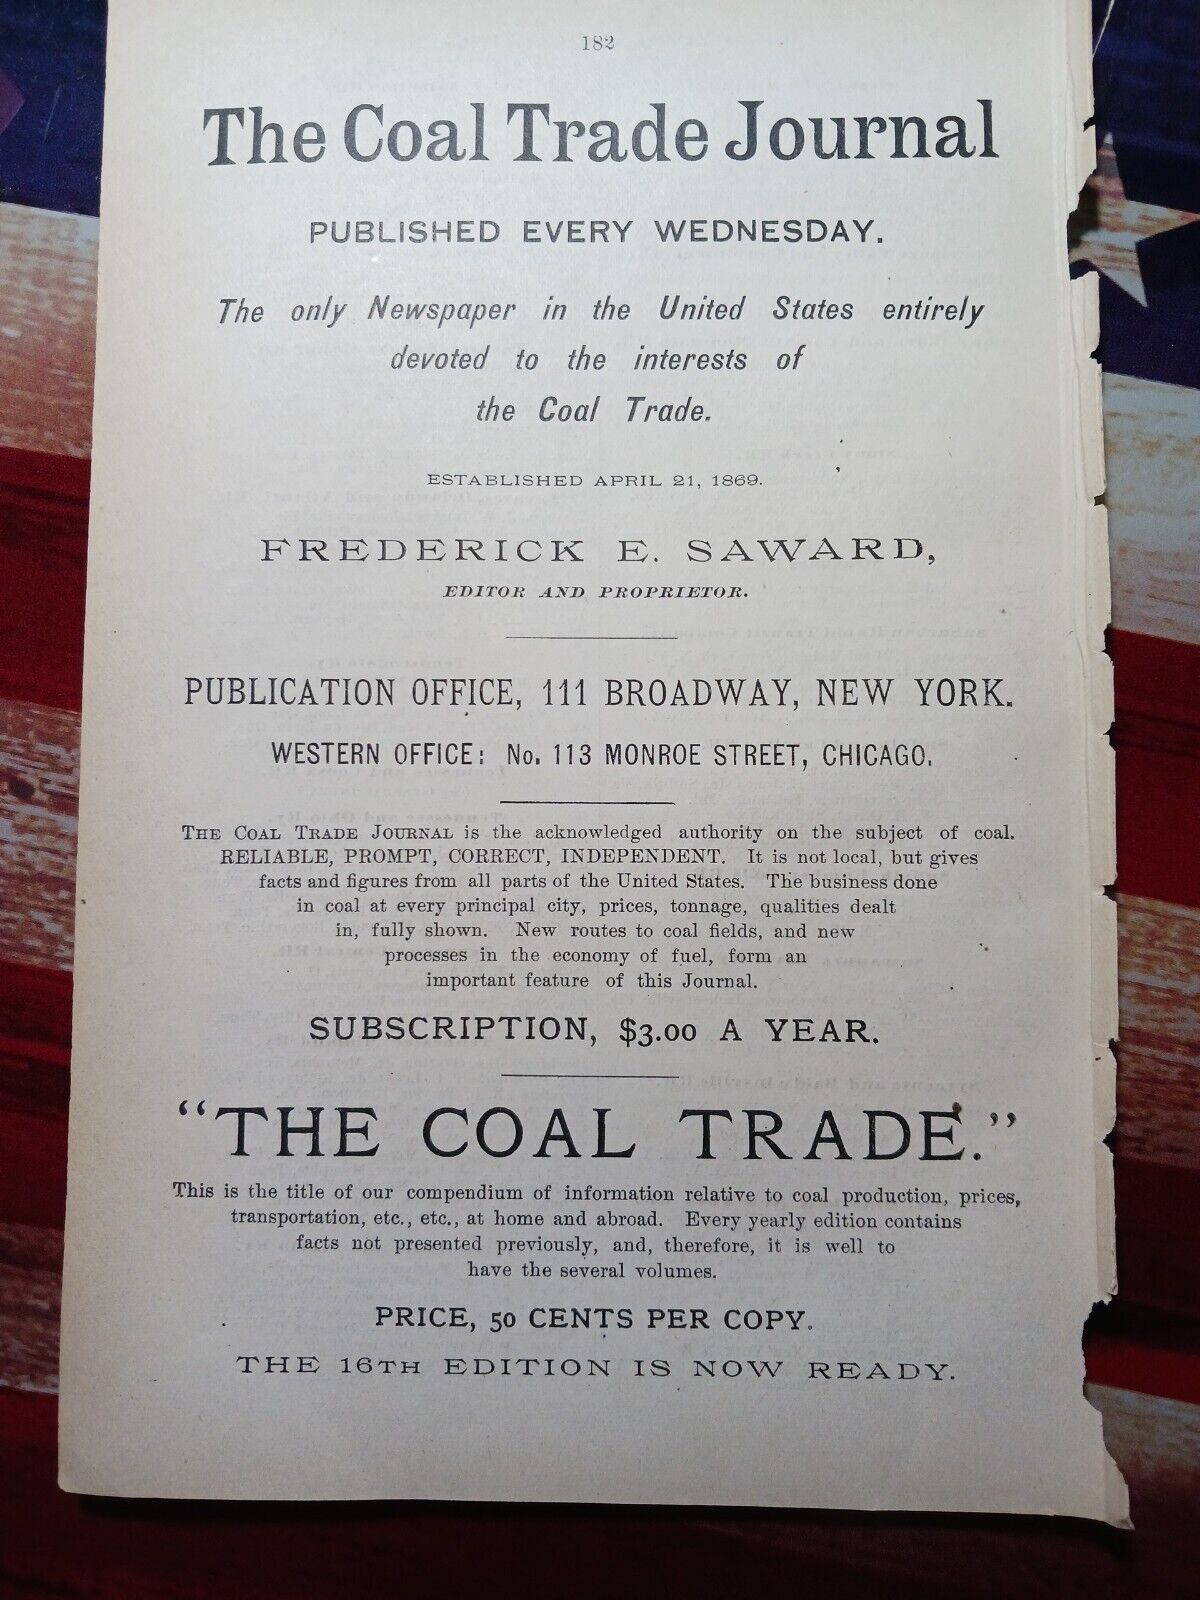 1889 Print Ad ~ THE COAL TRADE JOURNAL  weekly paper Frederick Saward Editor